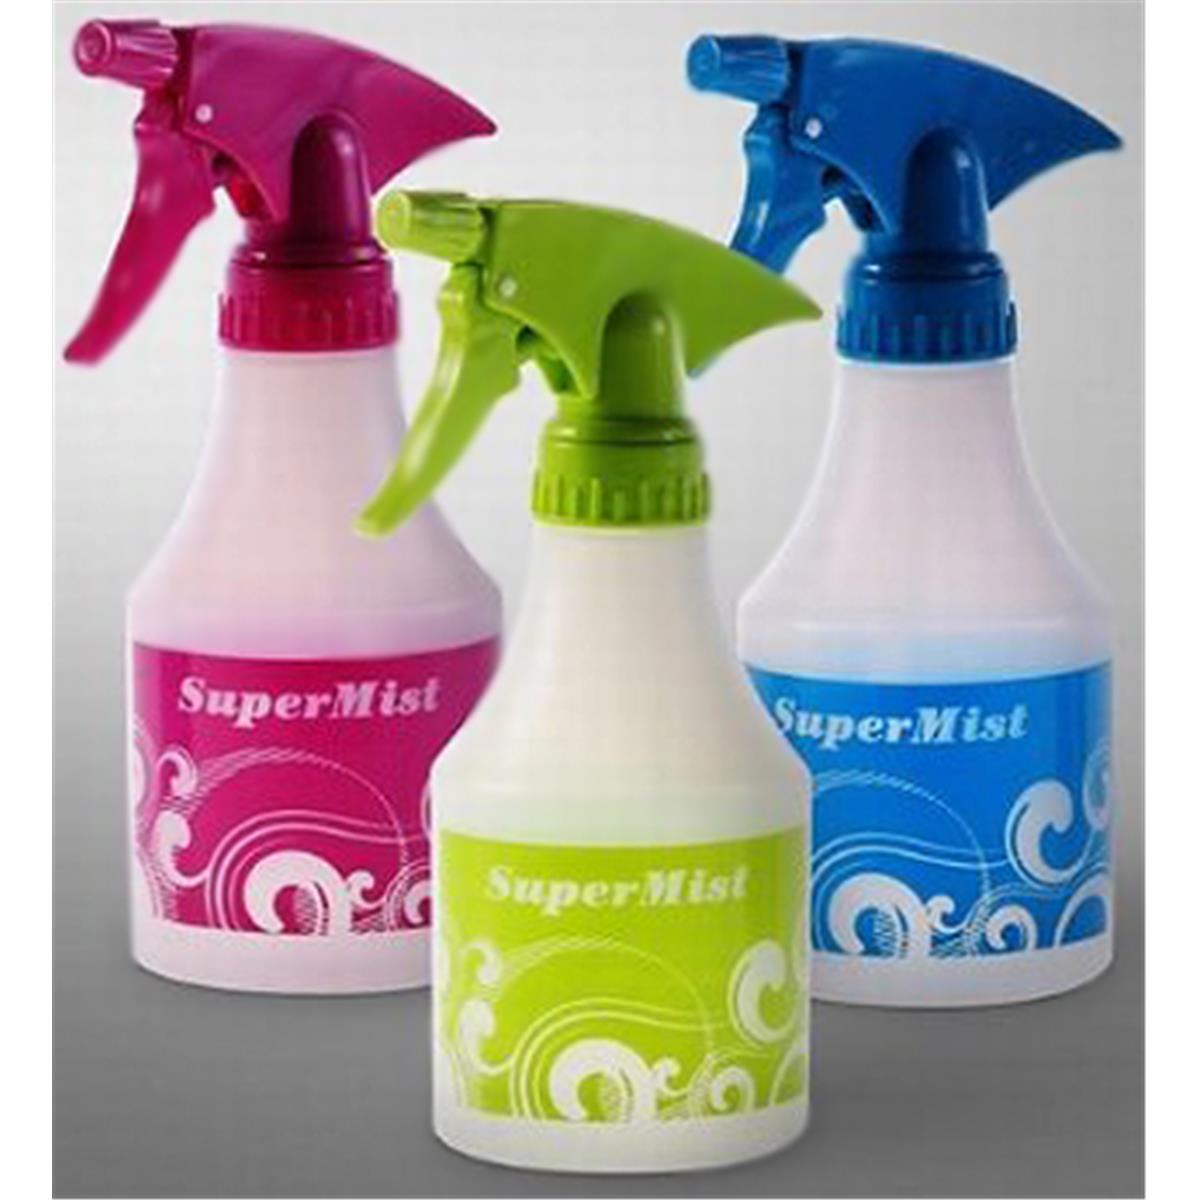 Bj-8 8 Oz Supermist Spray Bottle